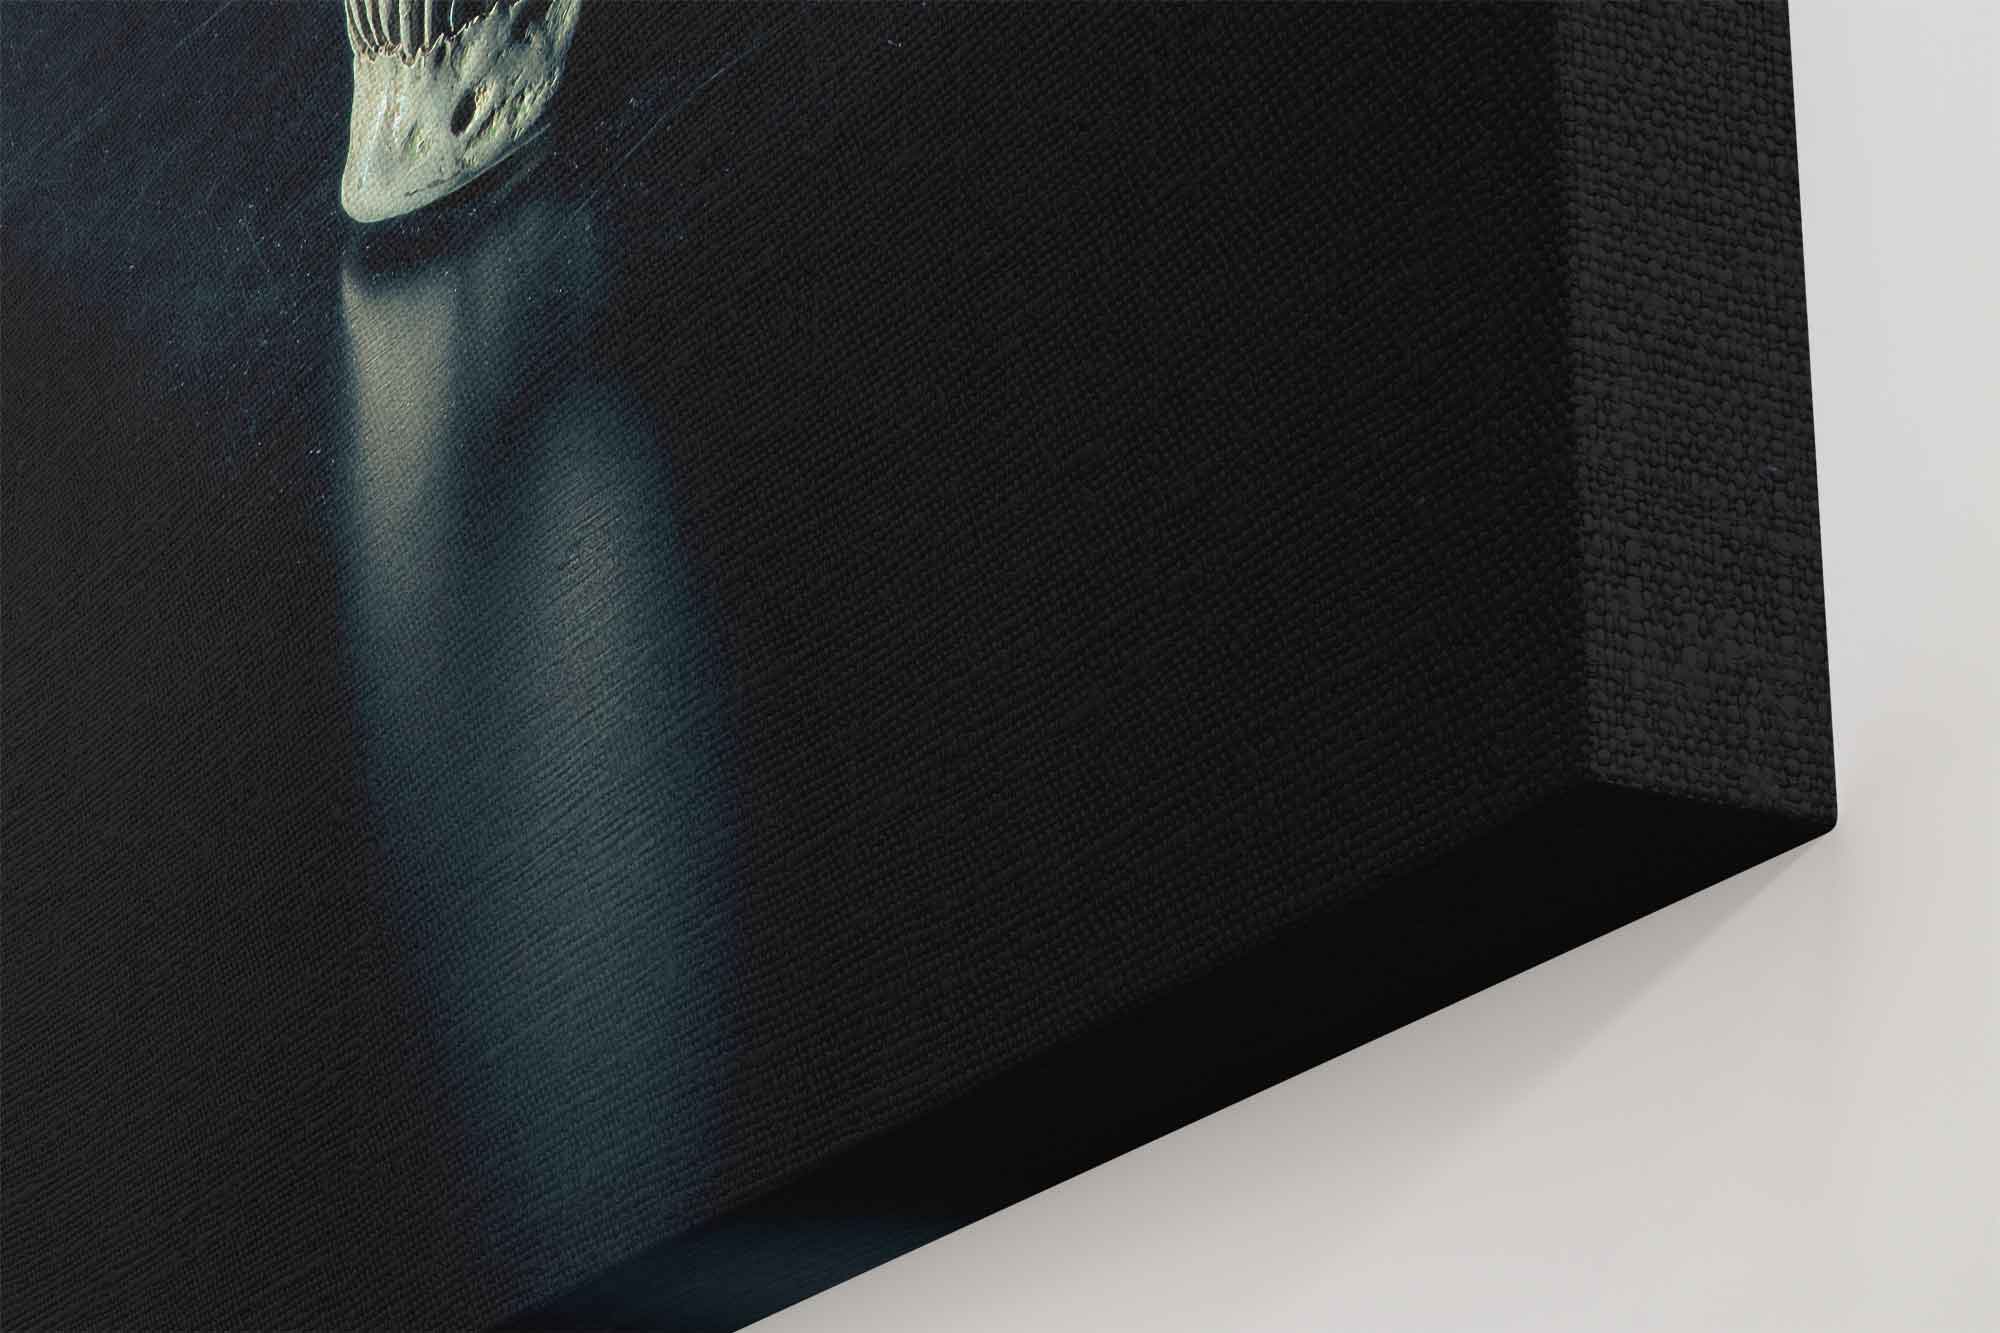 Human Skull Canvas, White Skull On Black Surface Canvas Print - WallArtPrints4U